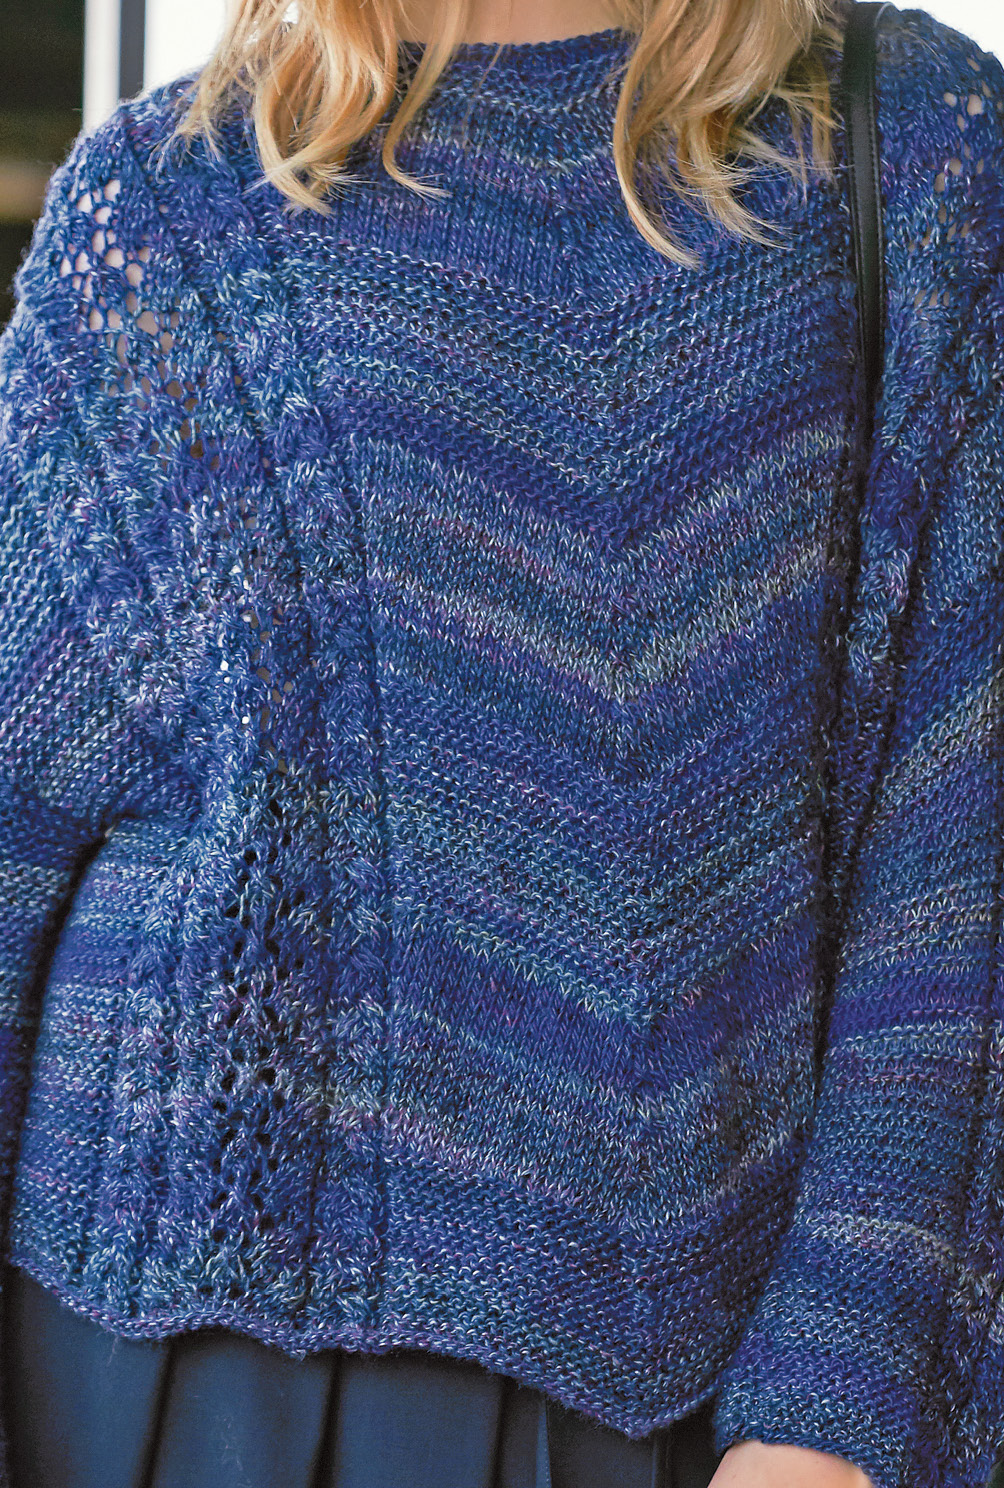 Oversize-Pulli in Royal-Violett-Türkis-Farbverlauf